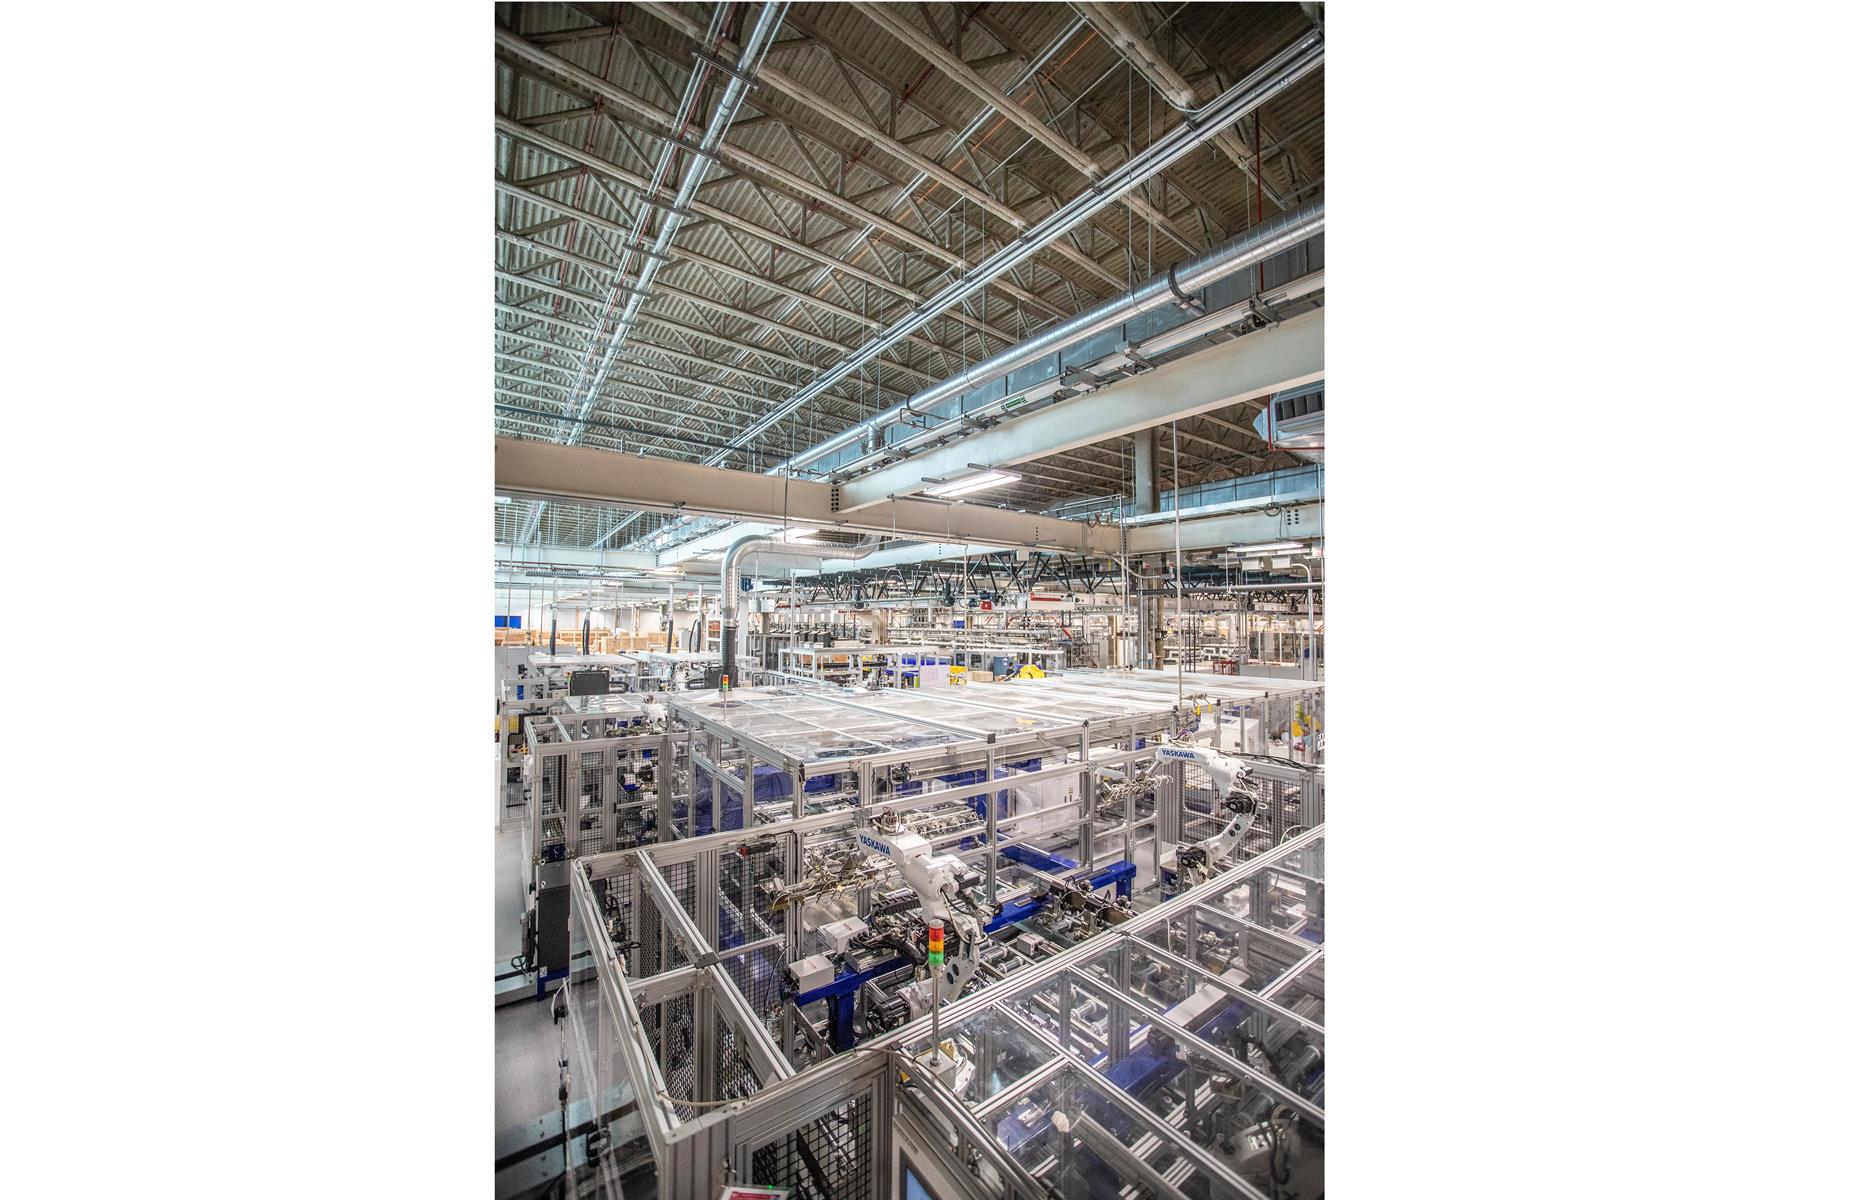 Tesla Gigafactory 2, USA: 1.2 million square feet (111,500 square metres)